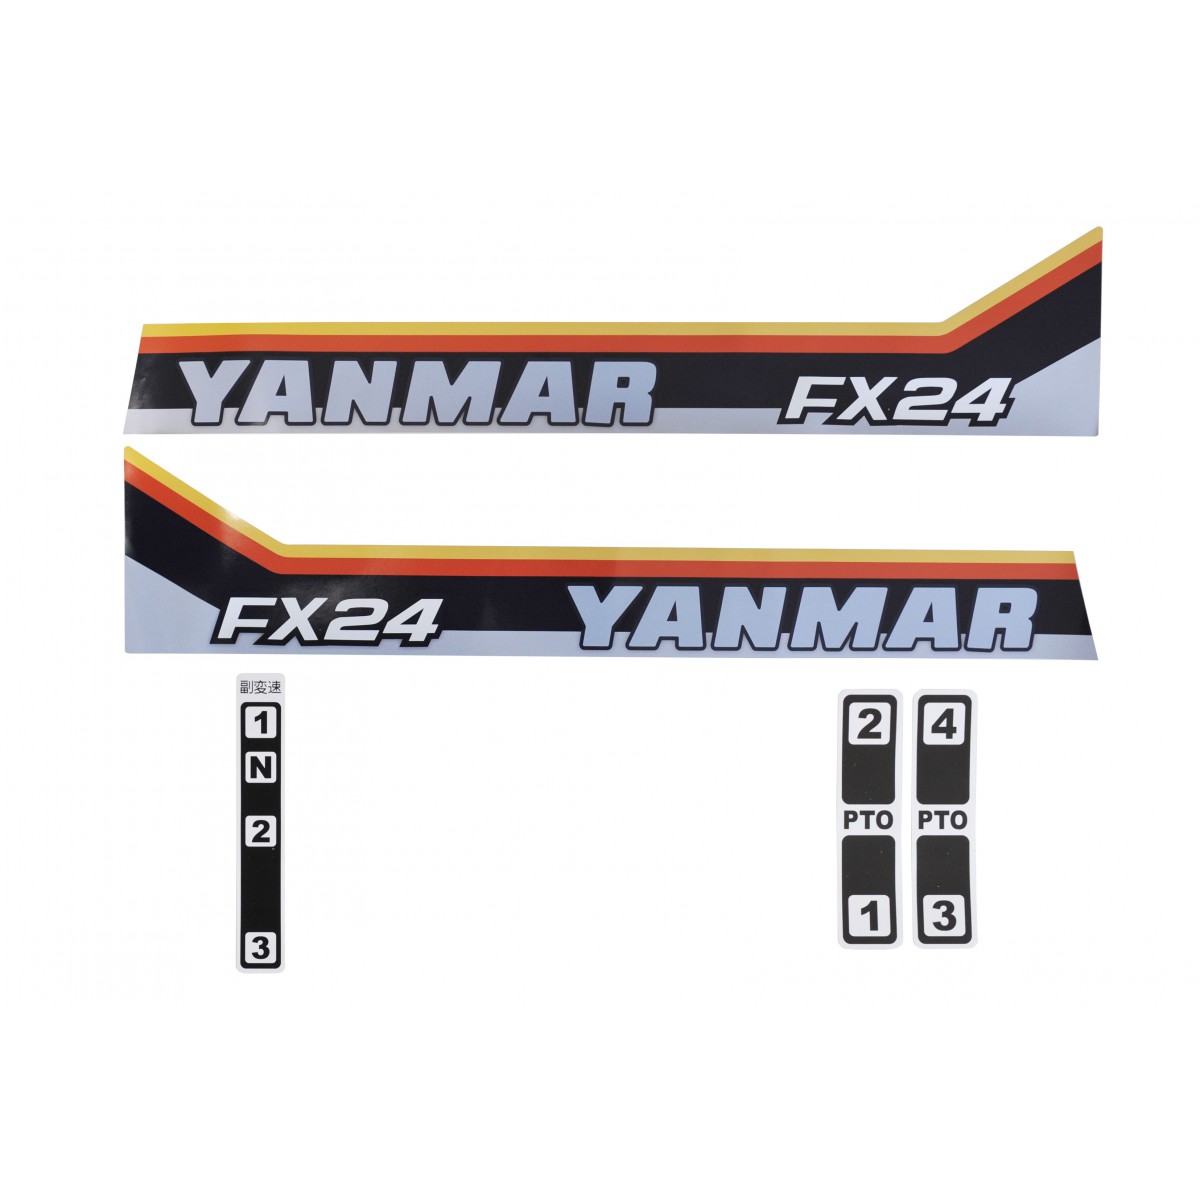 Yanmar FX24 stickers